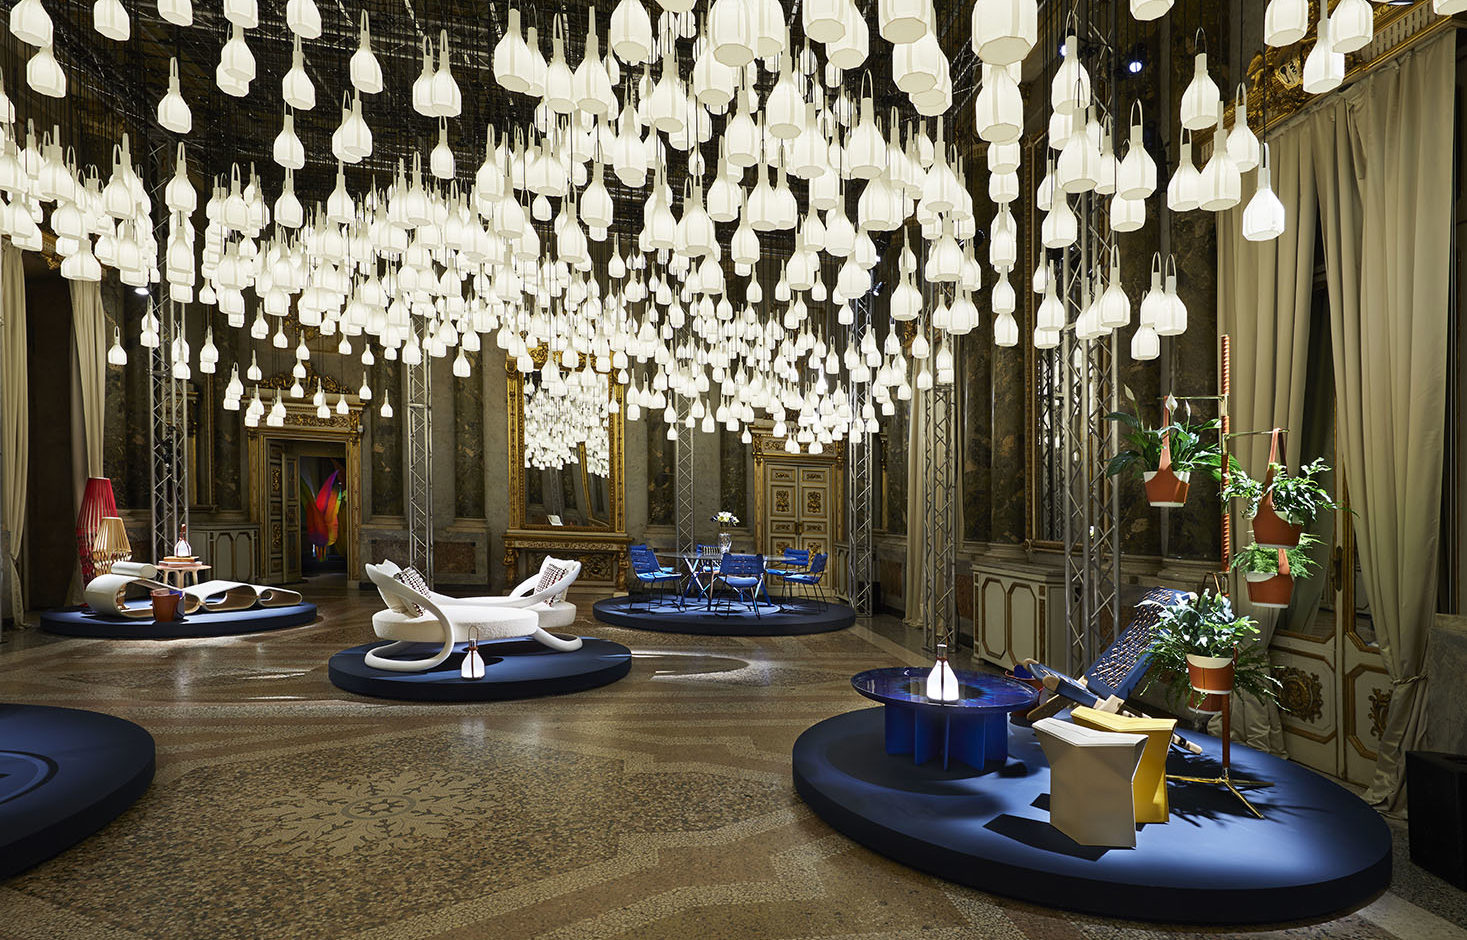 Take a Virtual Tour of Louis Vuitton's Presentation at Palazzo